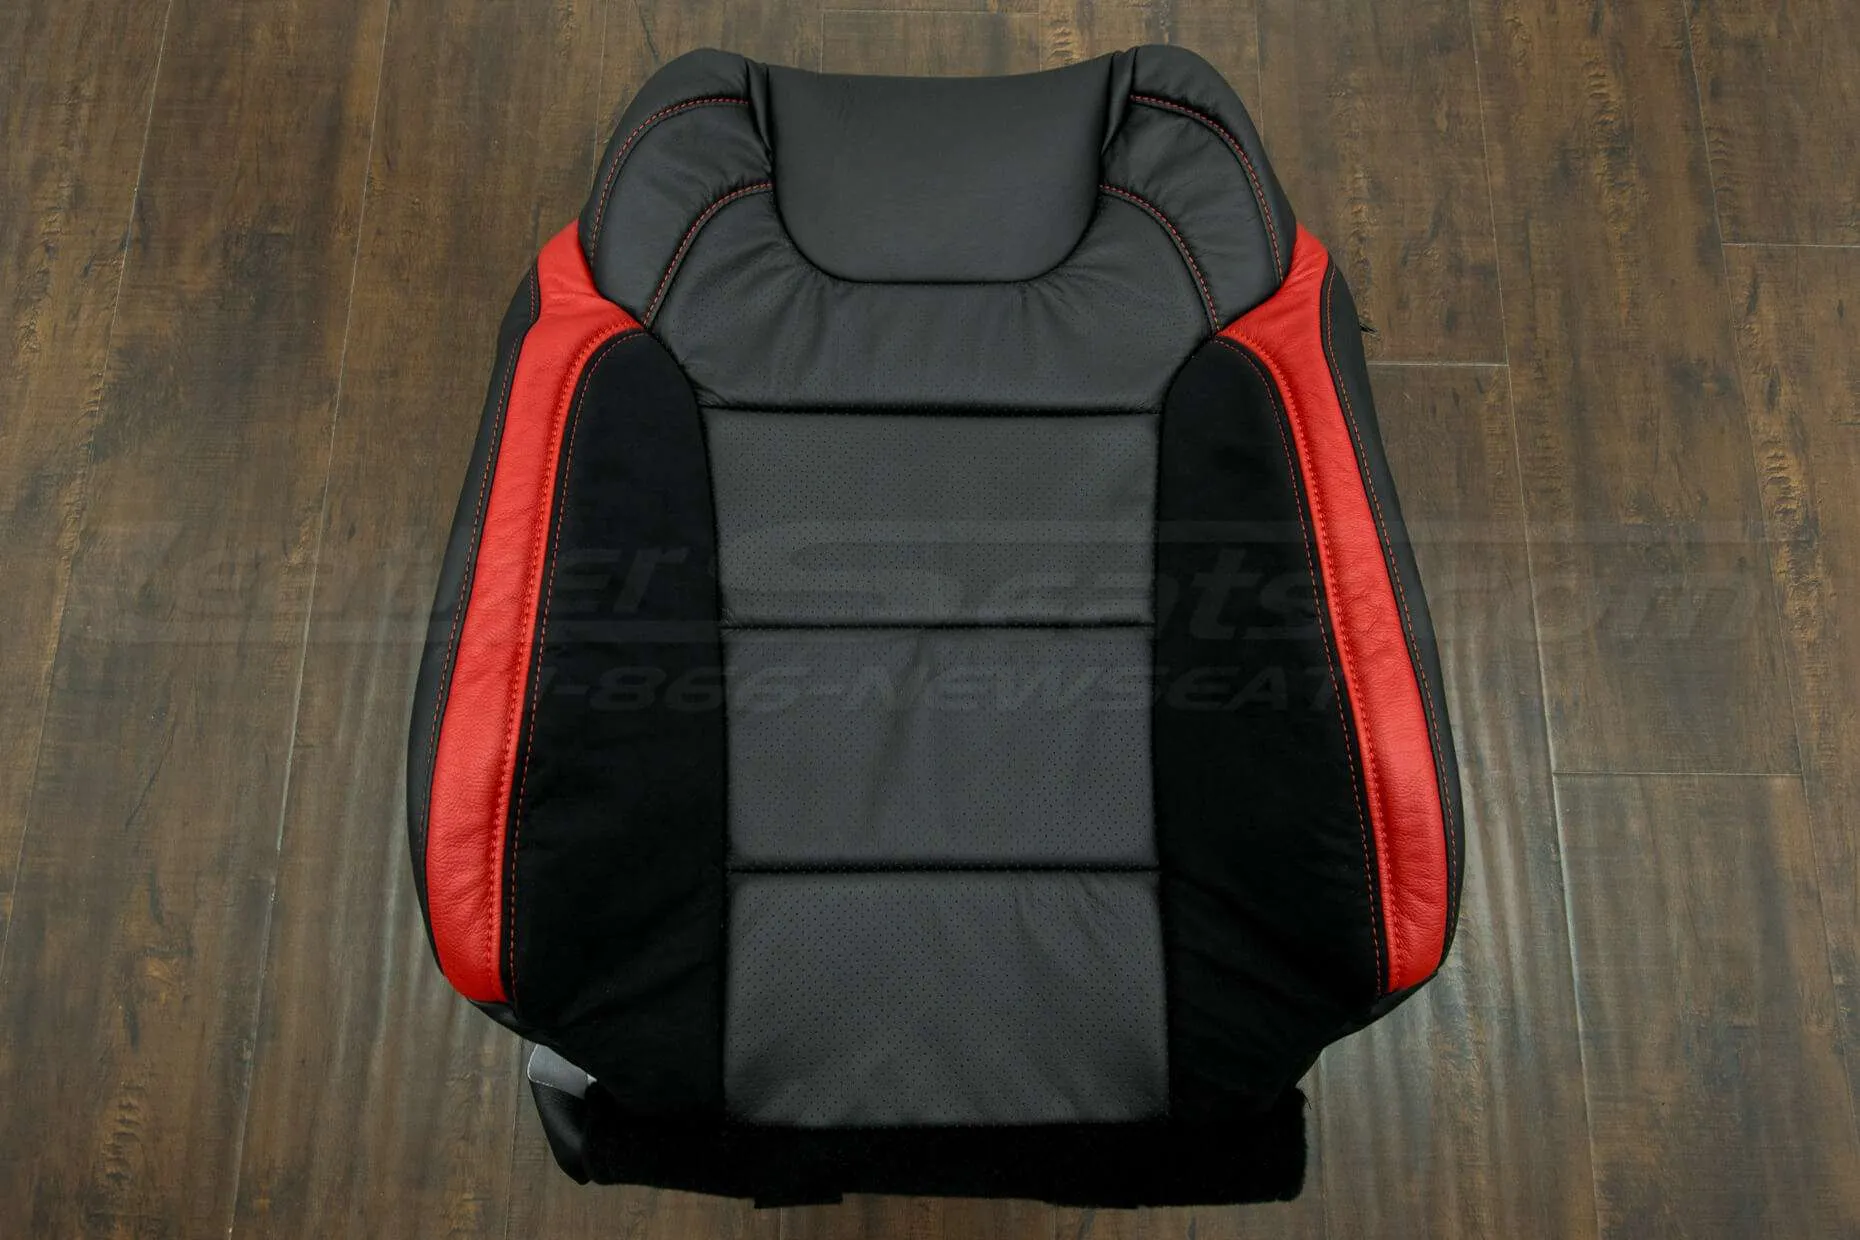 Ford Raptor Leather Upholstery Kit- Black & Bright Red - Front Backrest